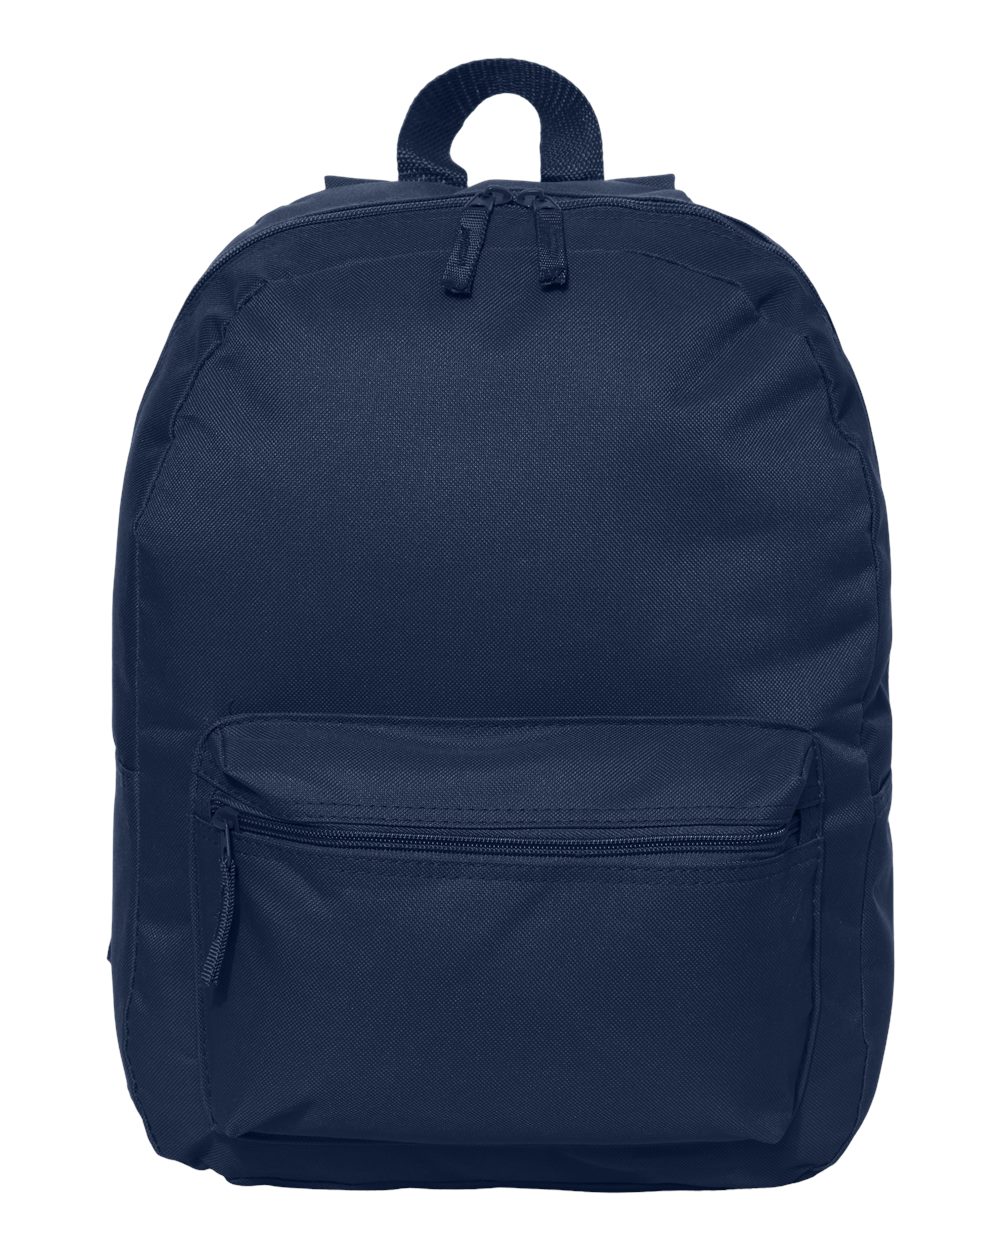 Liberty Bags 16" Basic Backpack - image 1 of 3